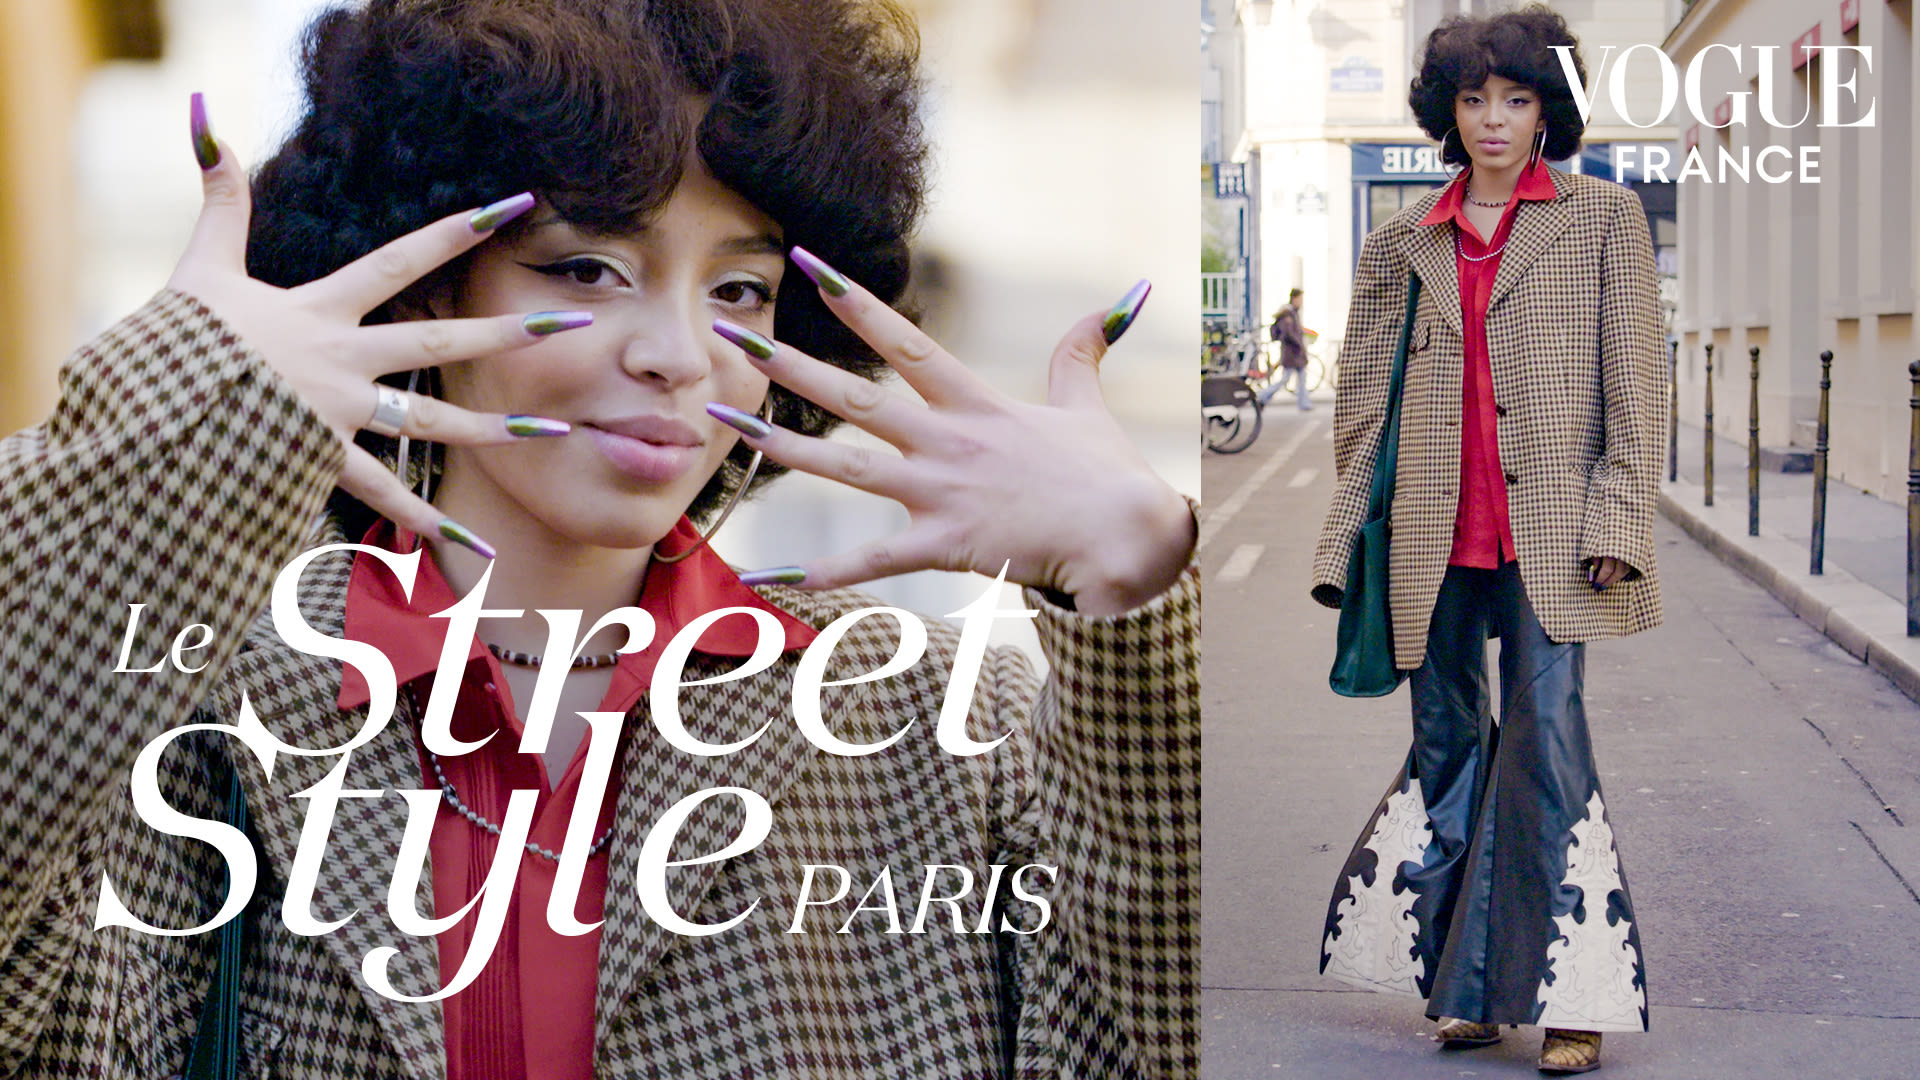 Le Street Style avec Lous and the Yakuza, Vogue France